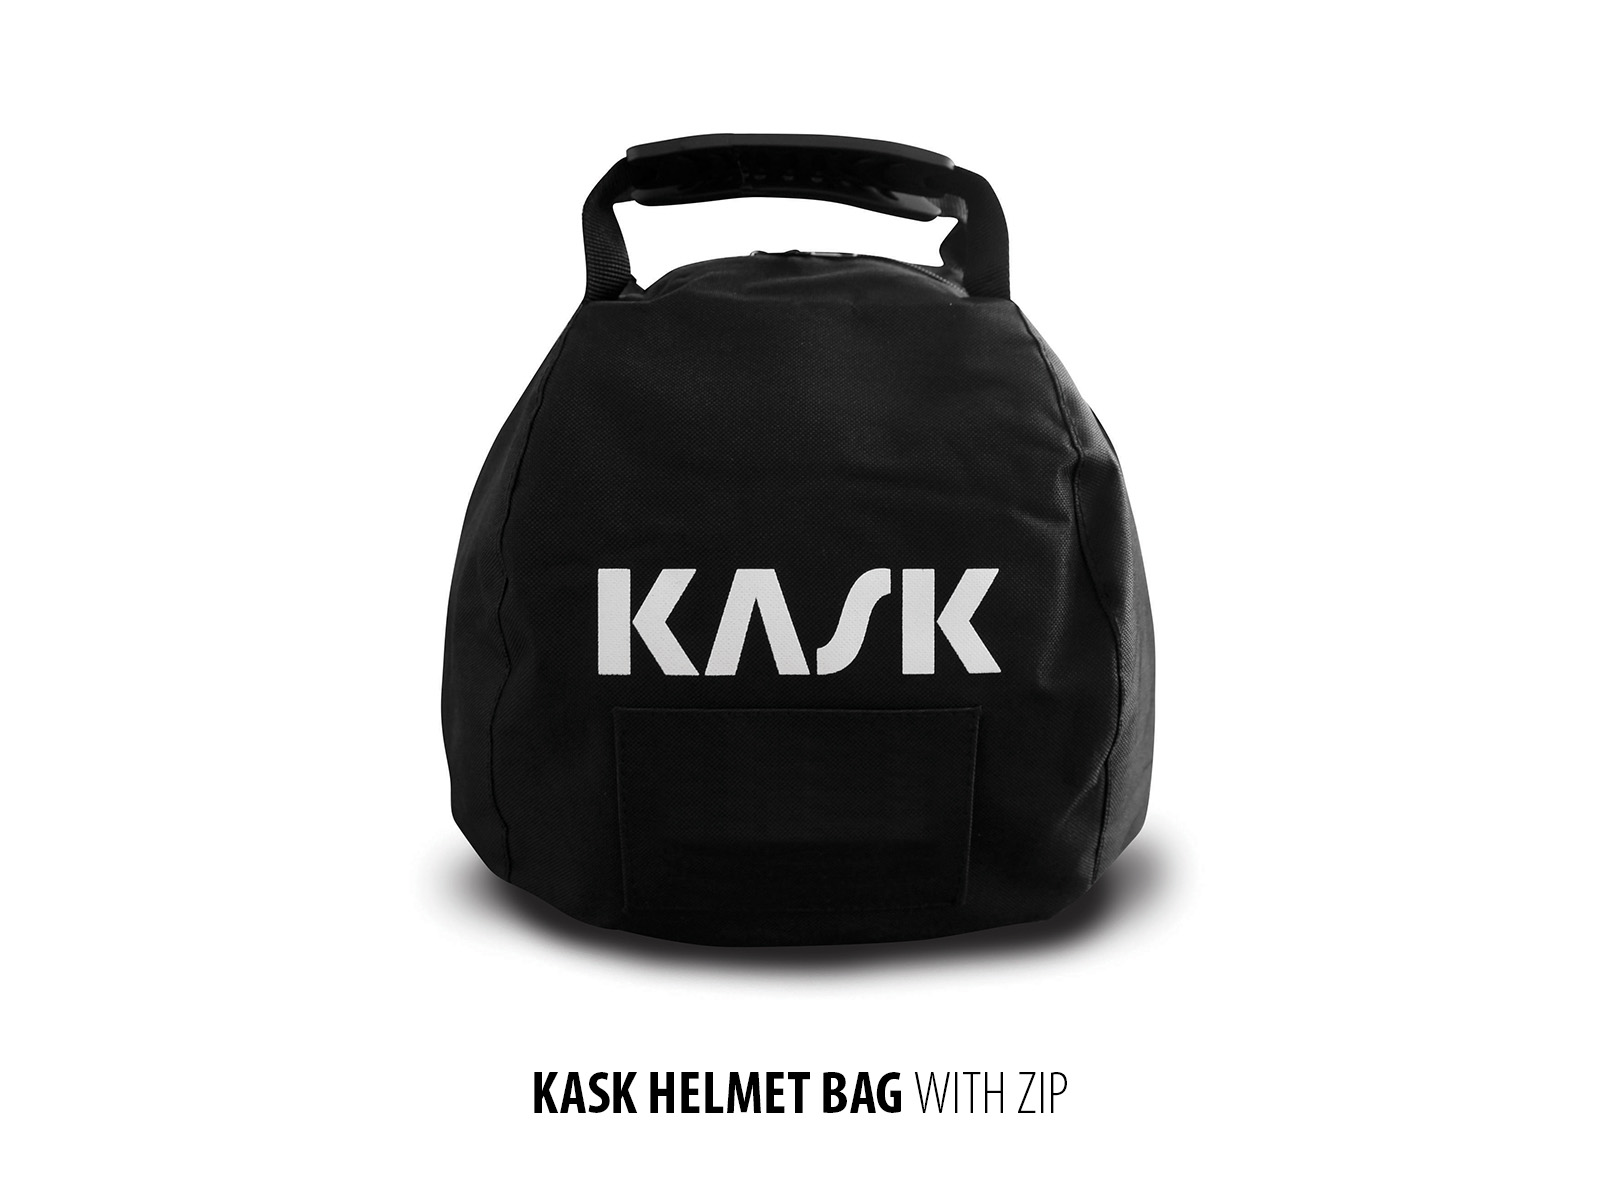 KASK Helmet Care